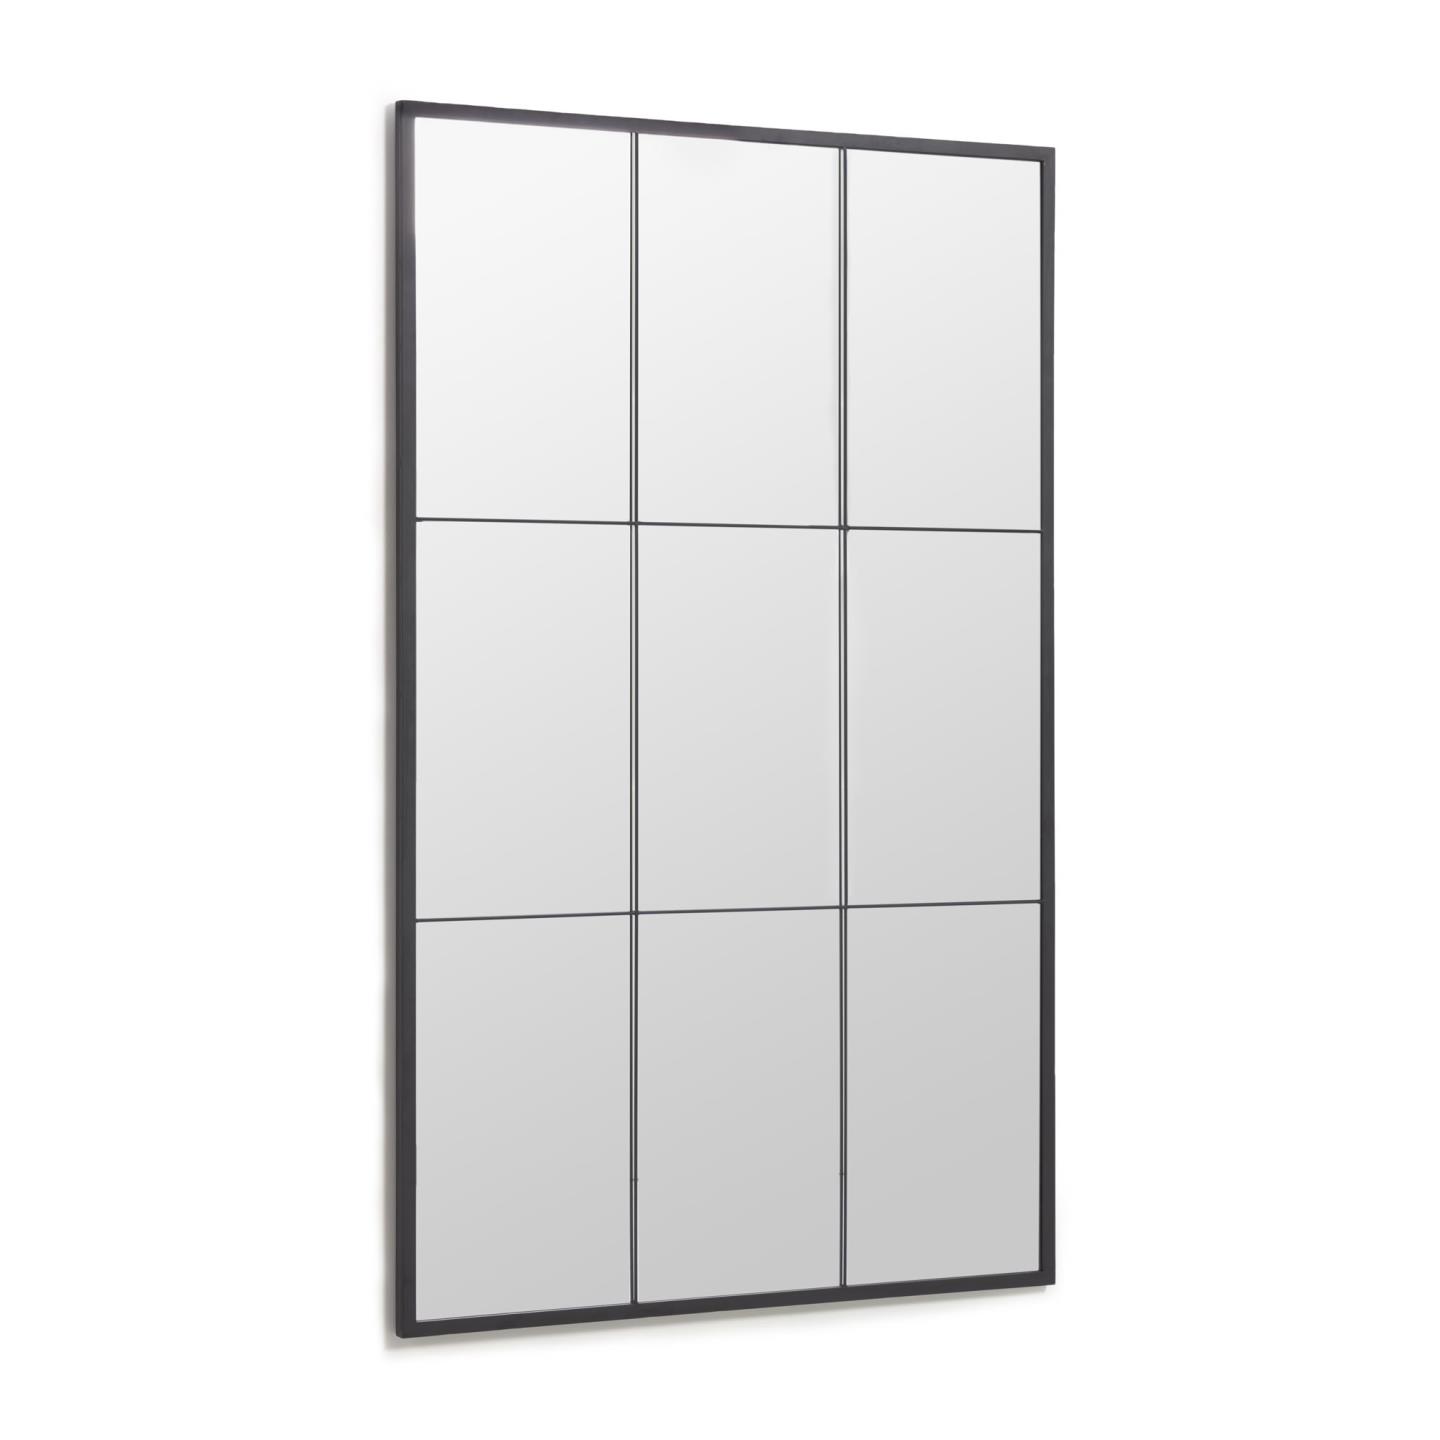 LAFORMA Ulrica gulvspejl, rektangulær - spejlglas og sort stål (100x160)